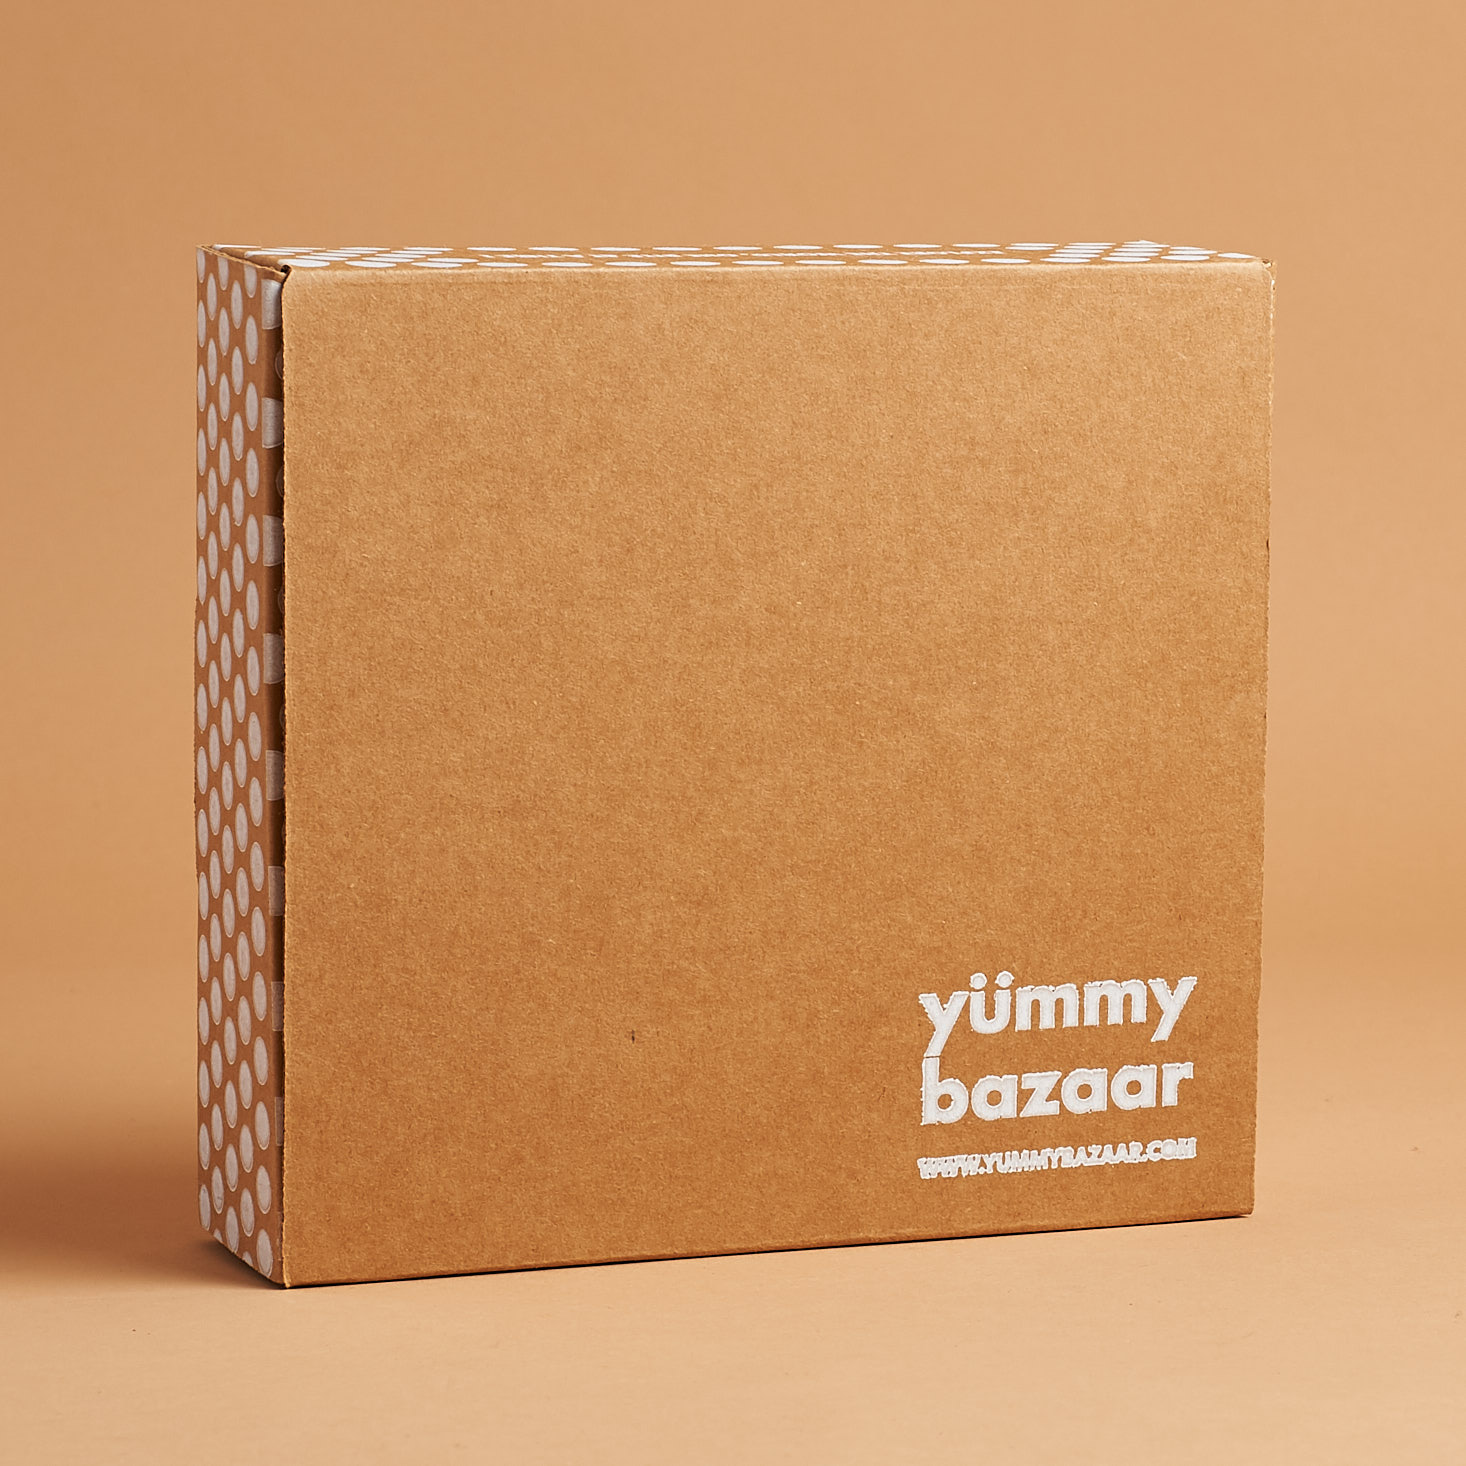 Yummy Bazaar World Sampler Box Review – June 2018